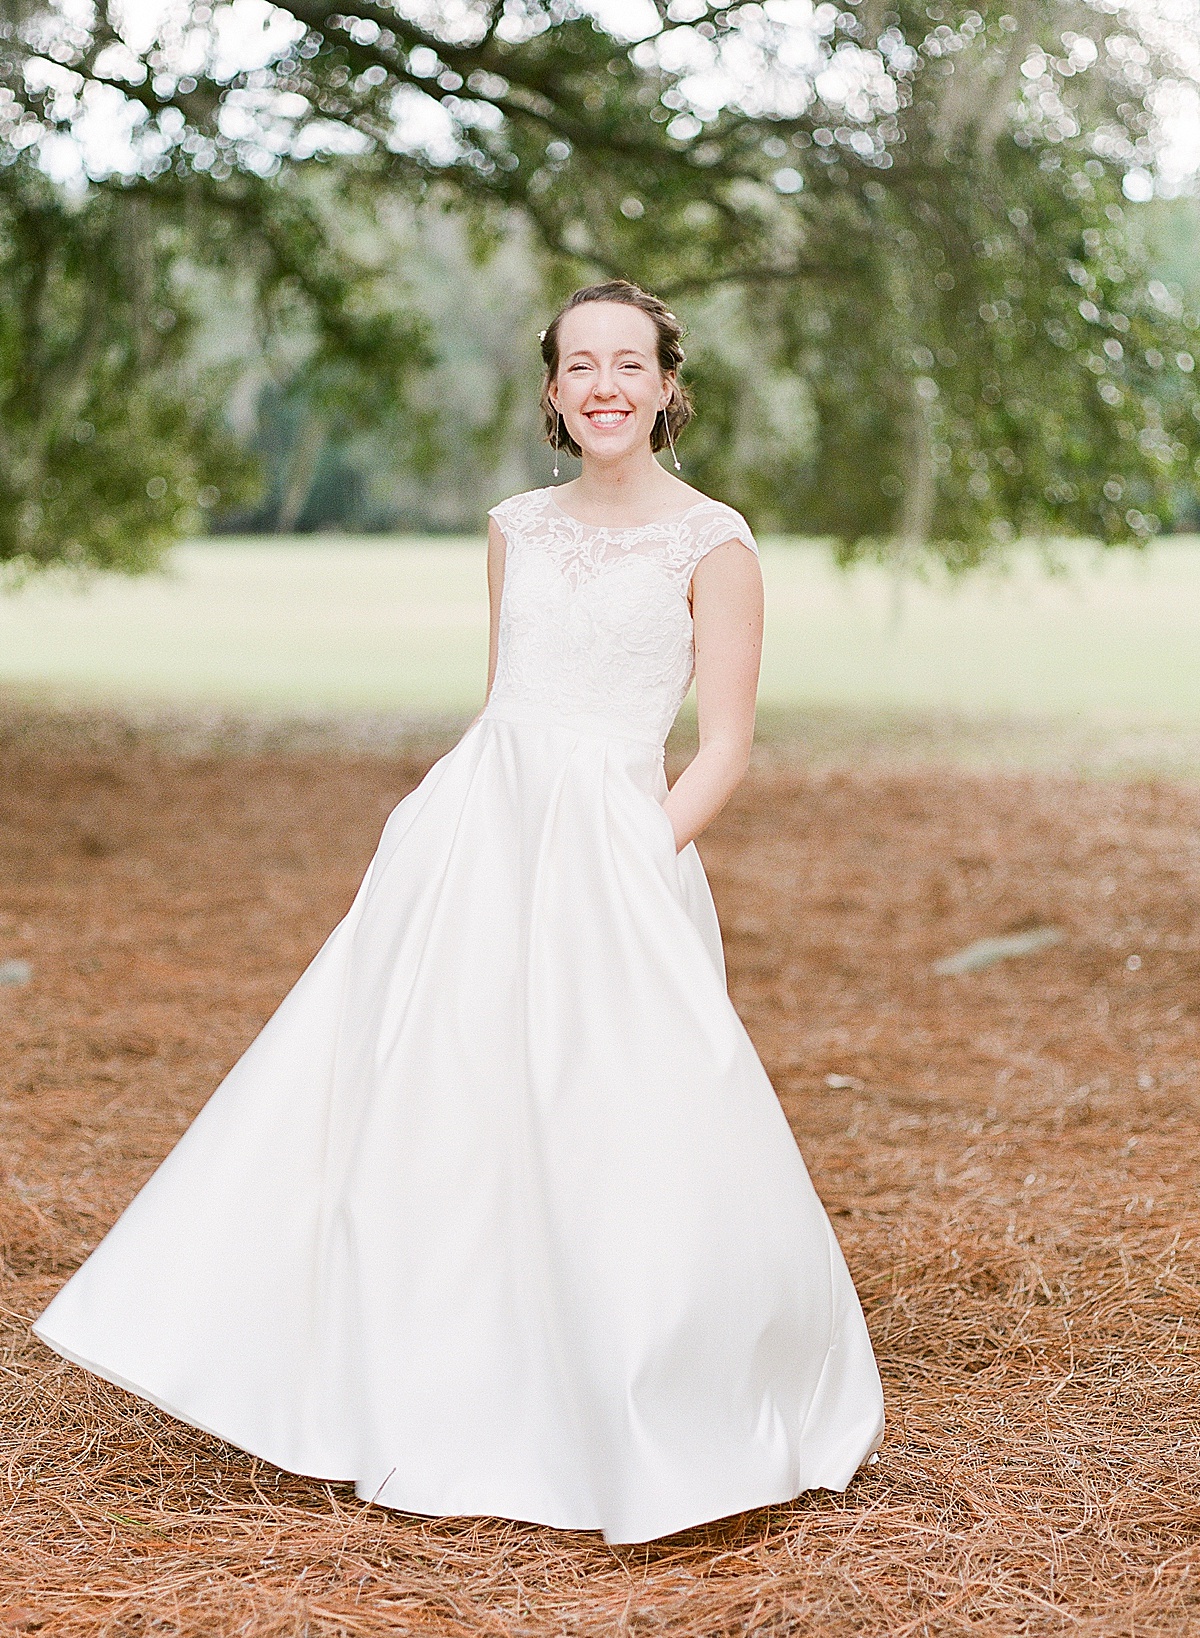 Bride twirling in Wedding Dress Under Trees Photo 